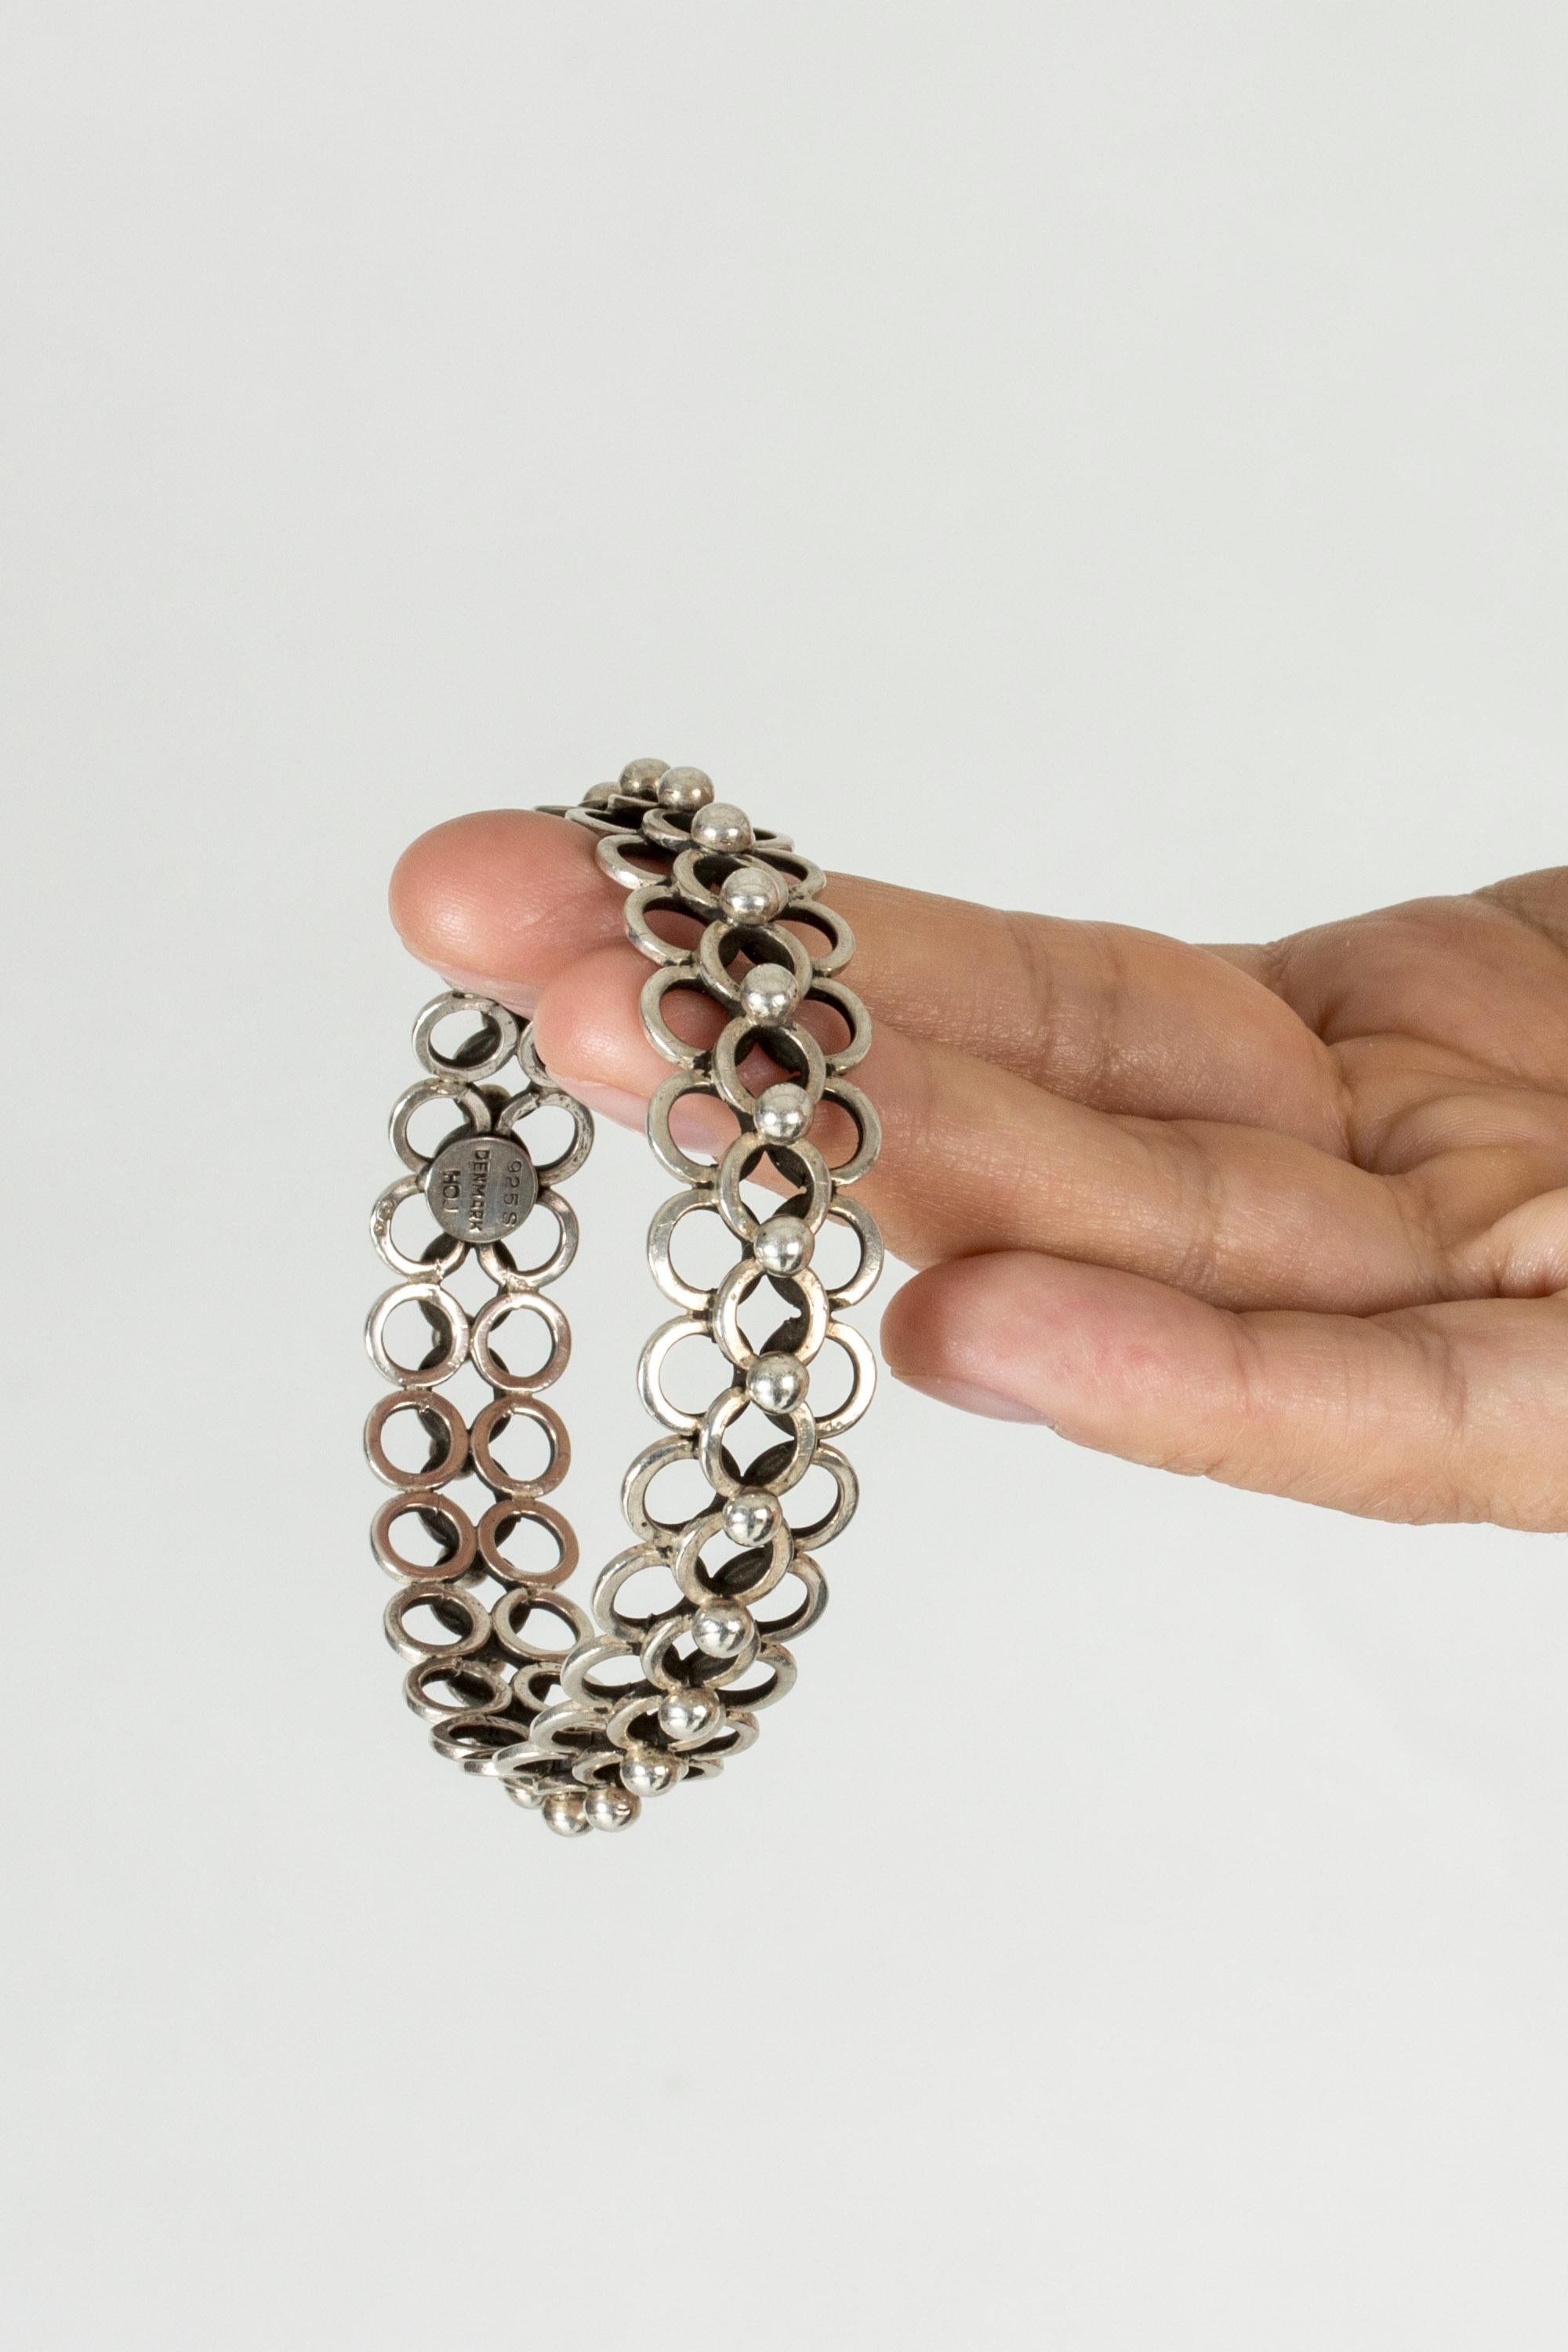 Very elegant silver bracelet by Hermann Ole Jacobsen, in an intricate design of interlocking silver hoops.

